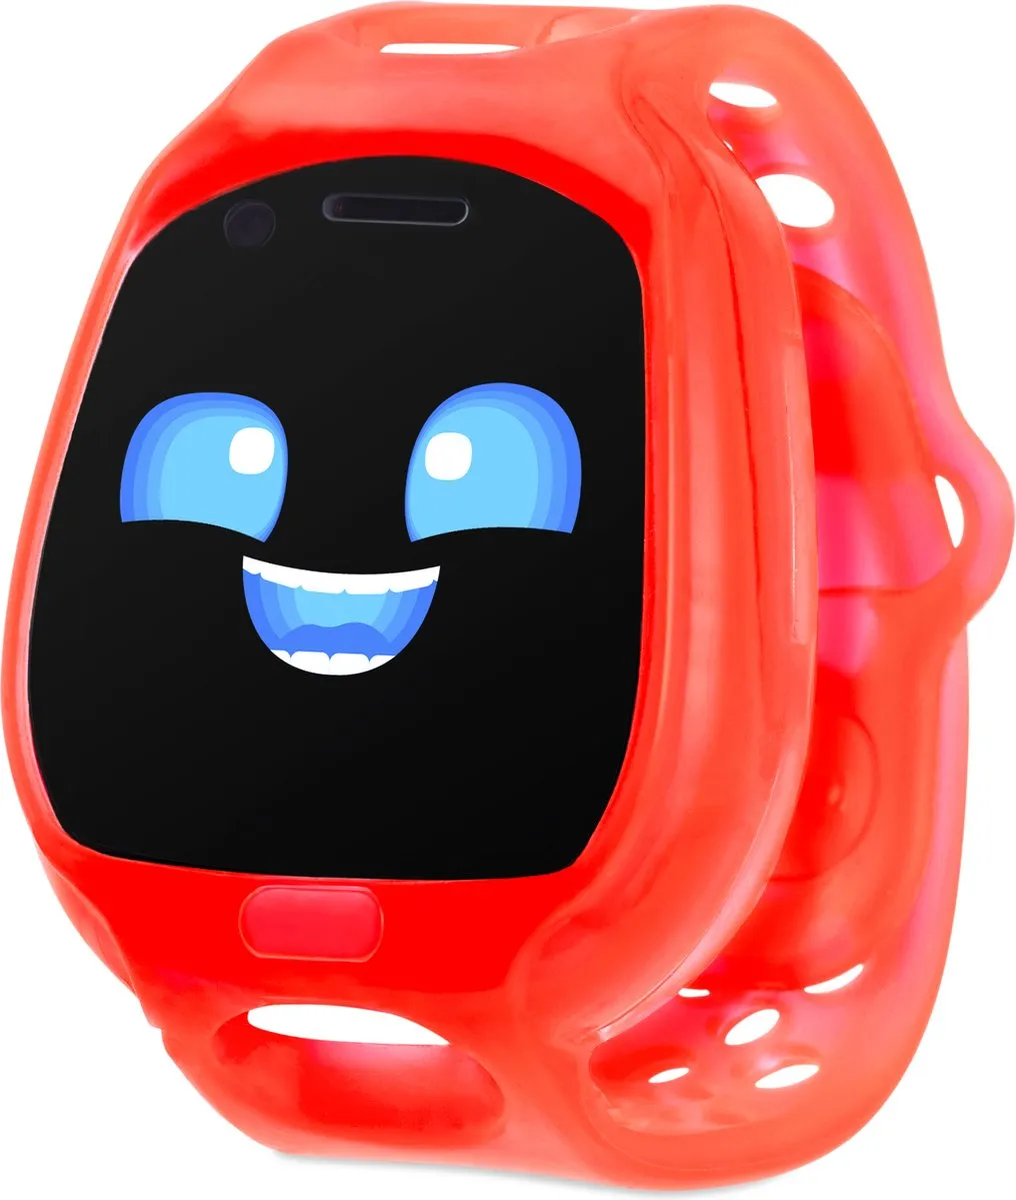 Little Tikes Tobi 2 Smartwatch Rood - Kindersmartwatch Leercomputer speelgoed